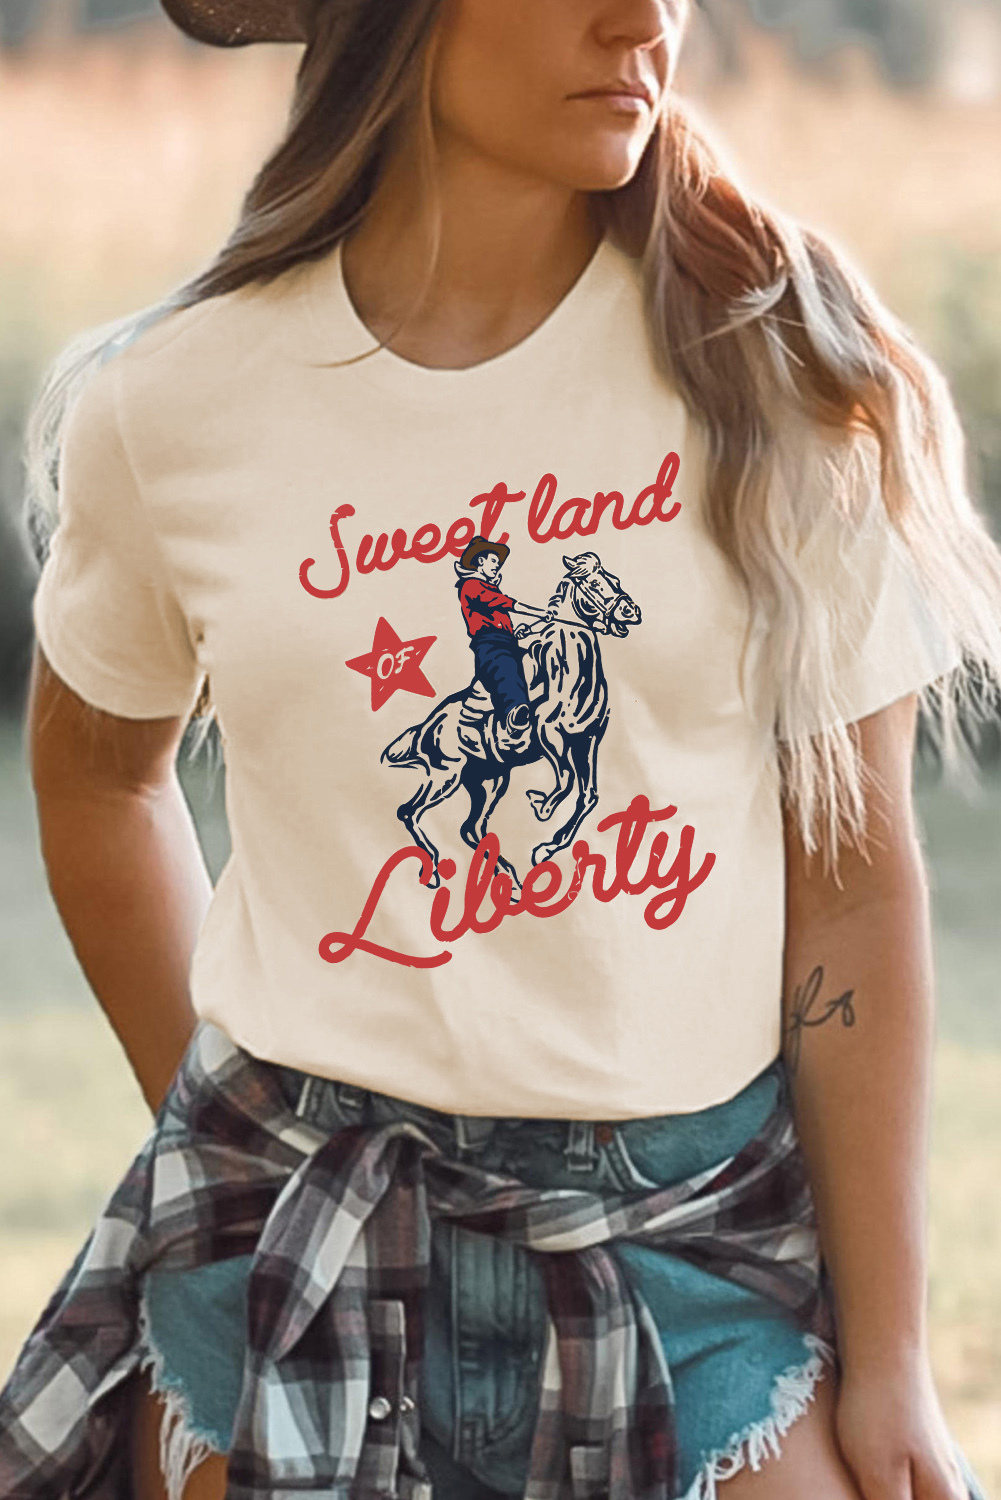 Sweet Land of Liberty Graphic Tee